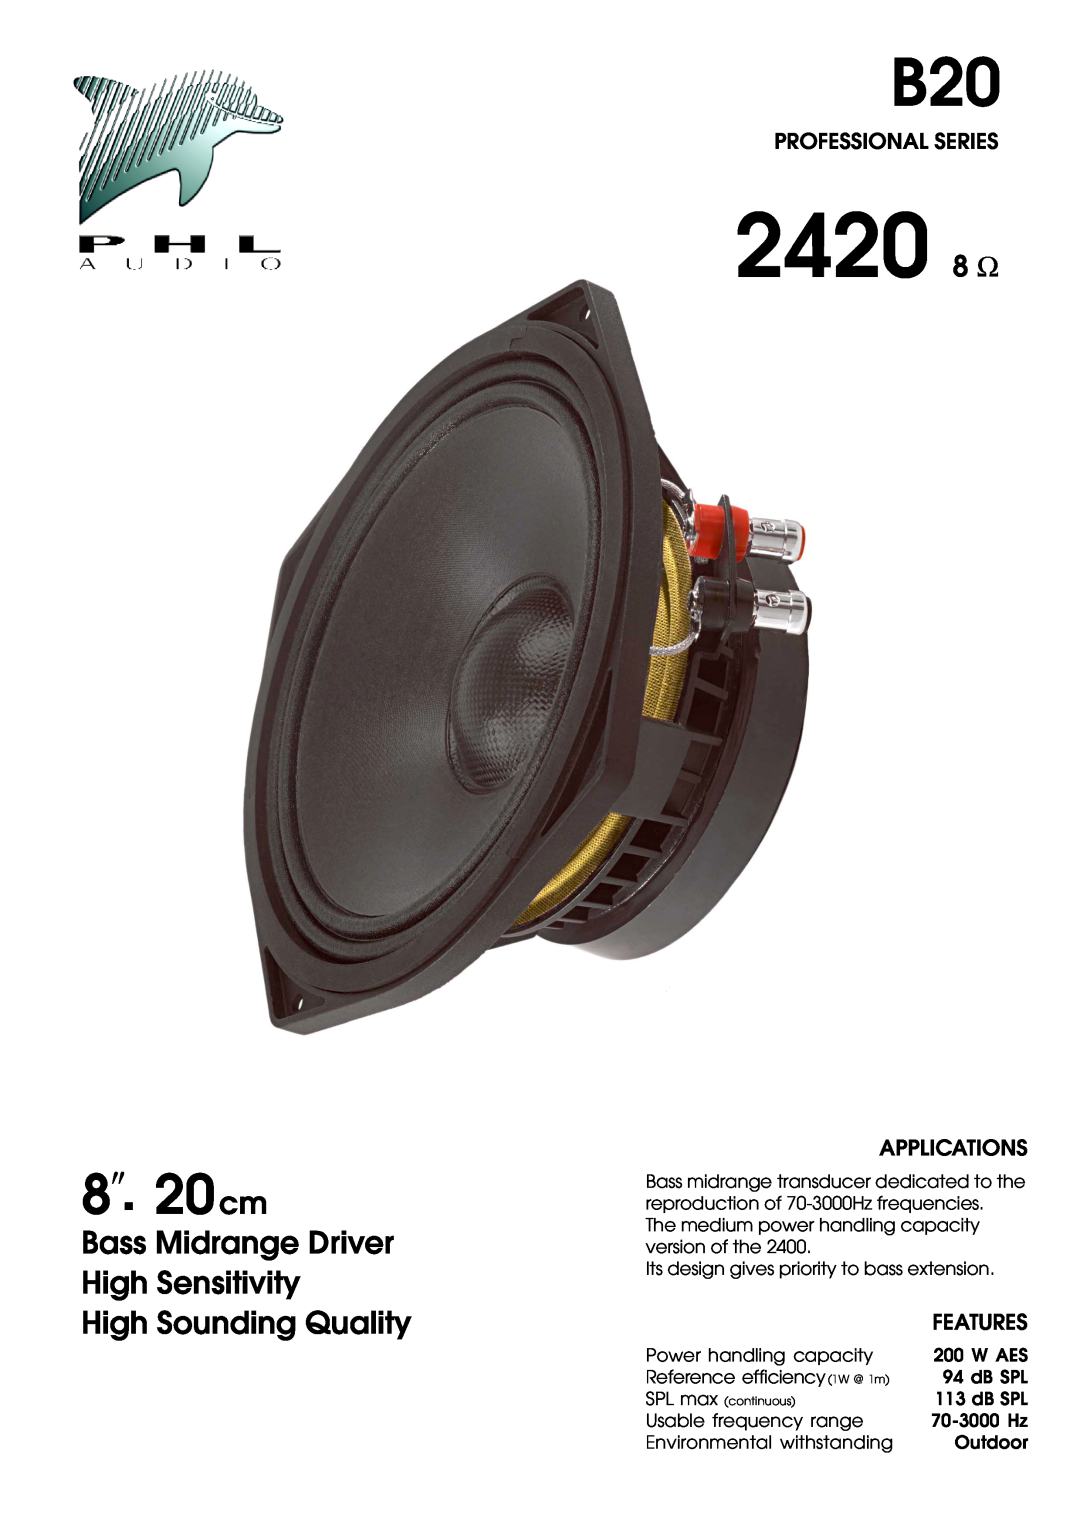 PHL Audio B20 manual Professional Series, Applications, 2420 8 Ω, 8 20cm 